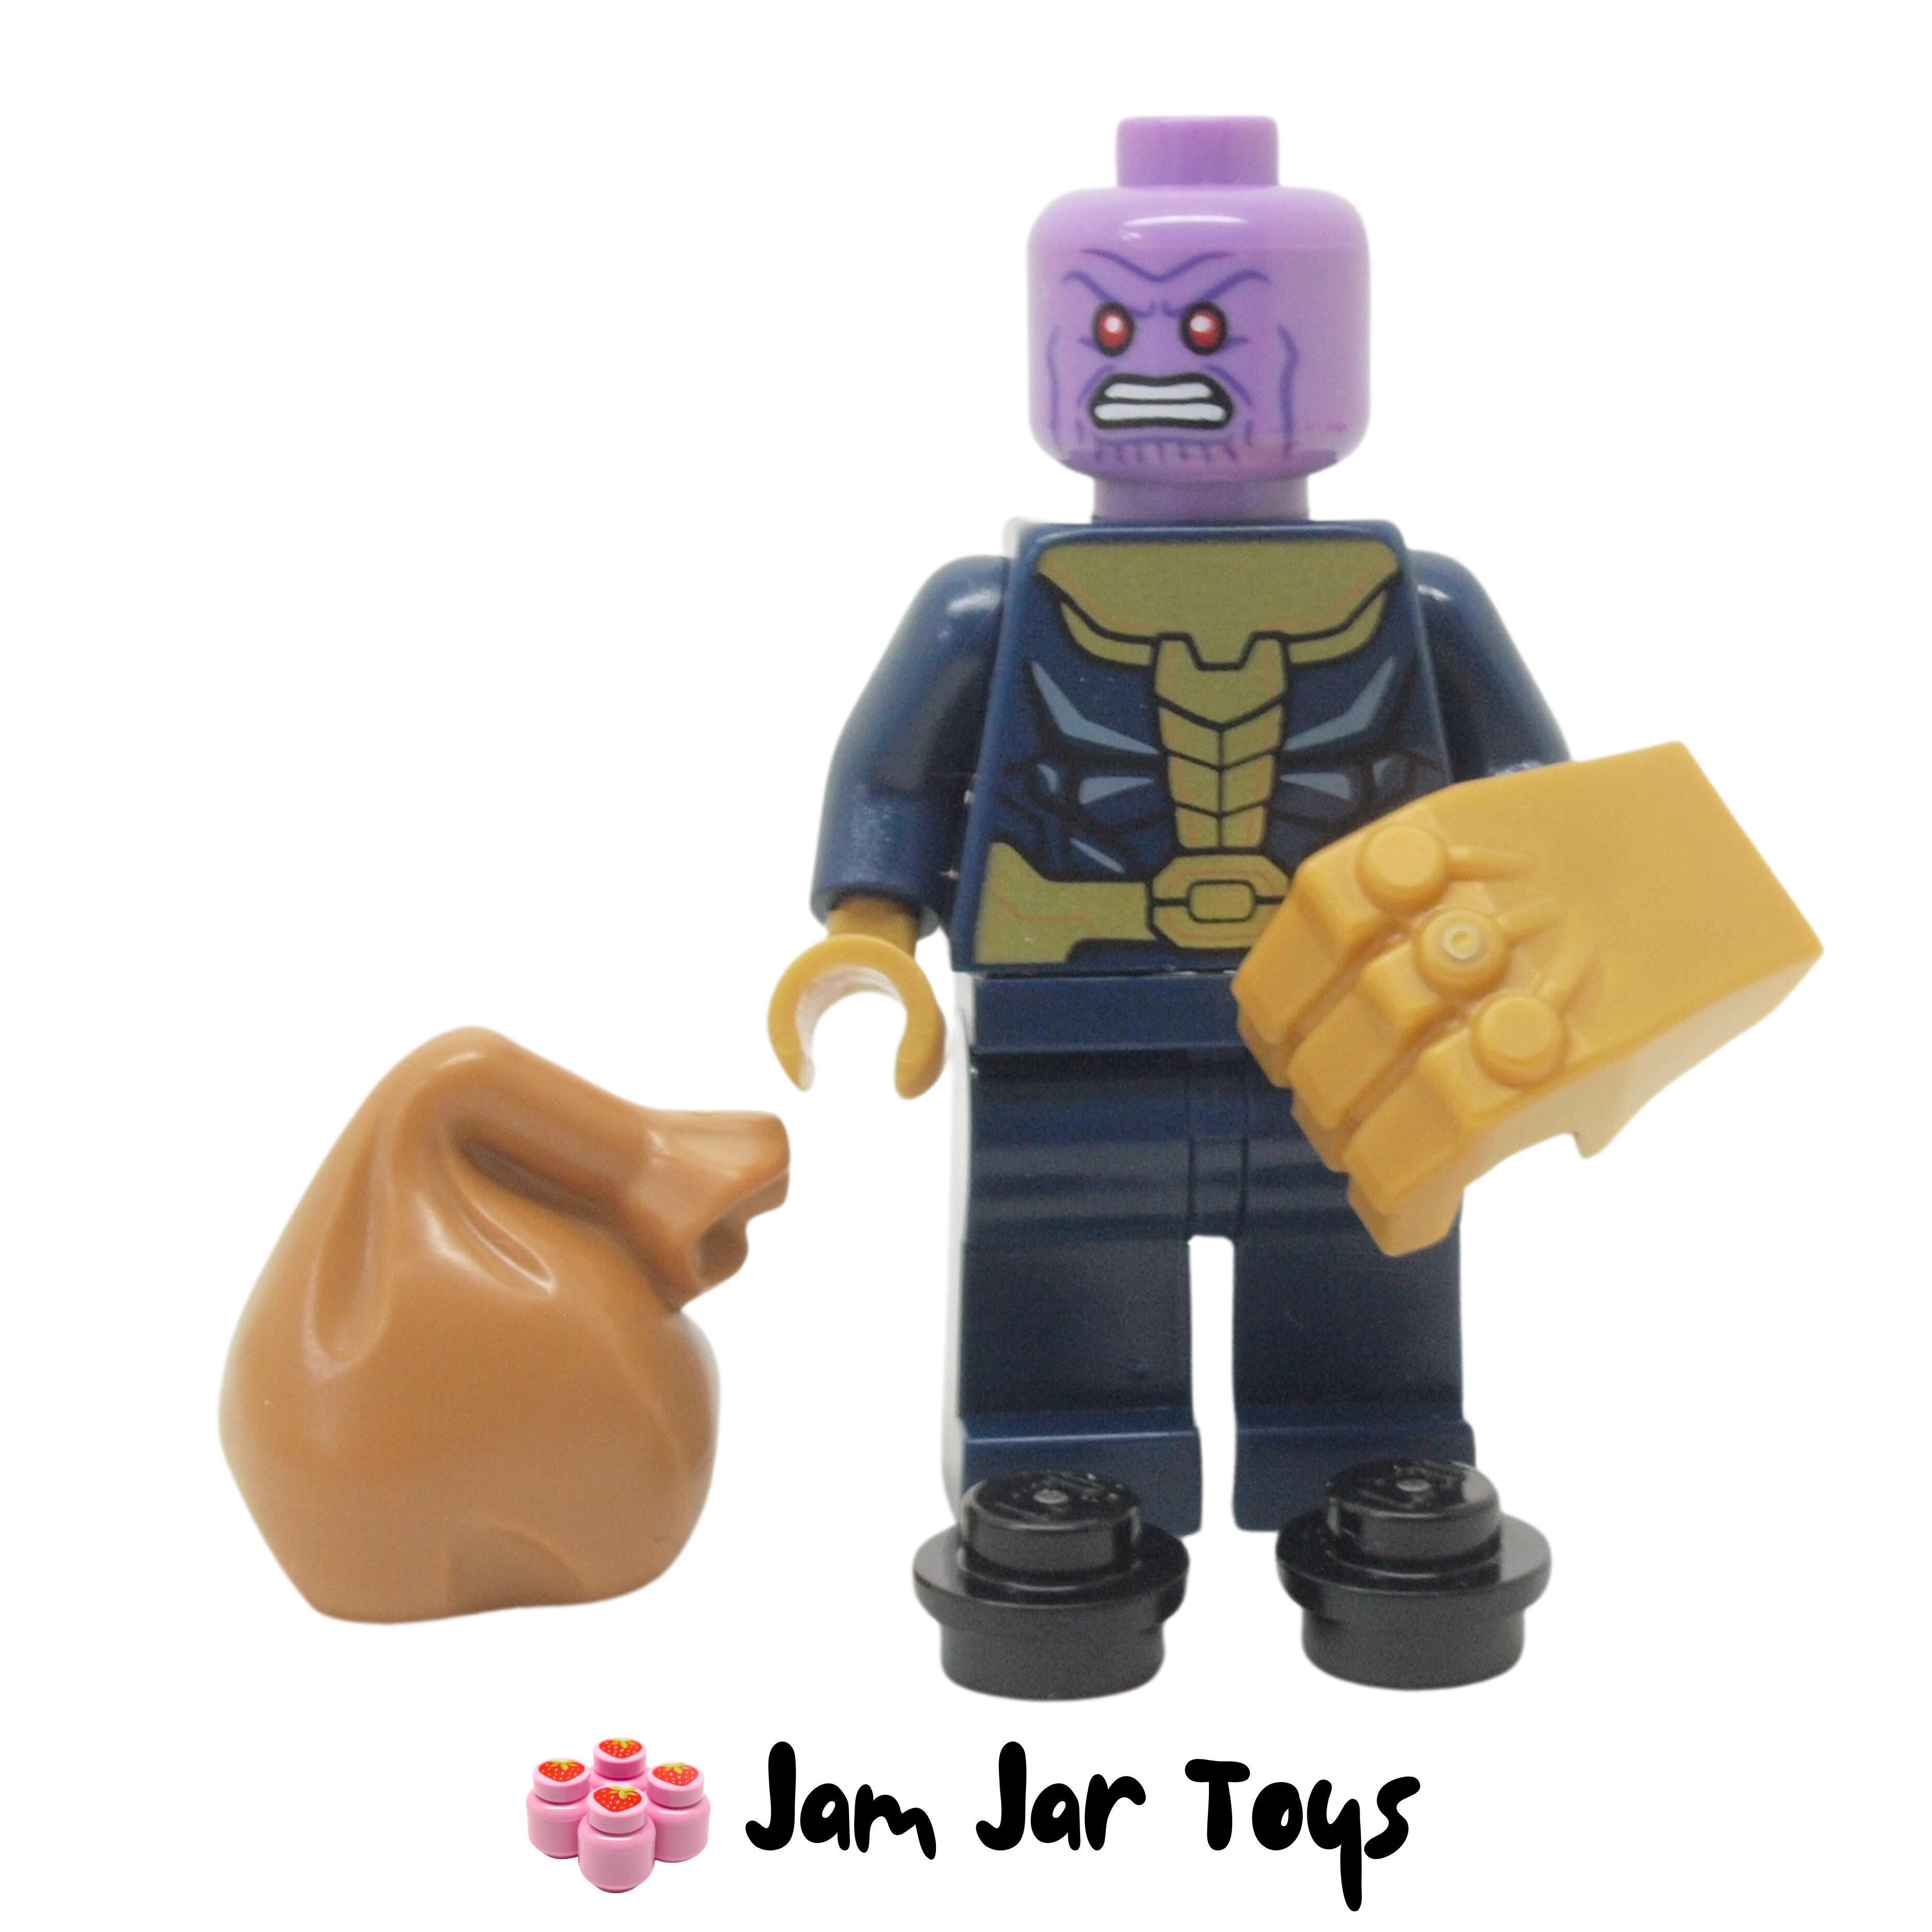  LEGO Marvel Avengers Endgame Minifigure - Thanos (with